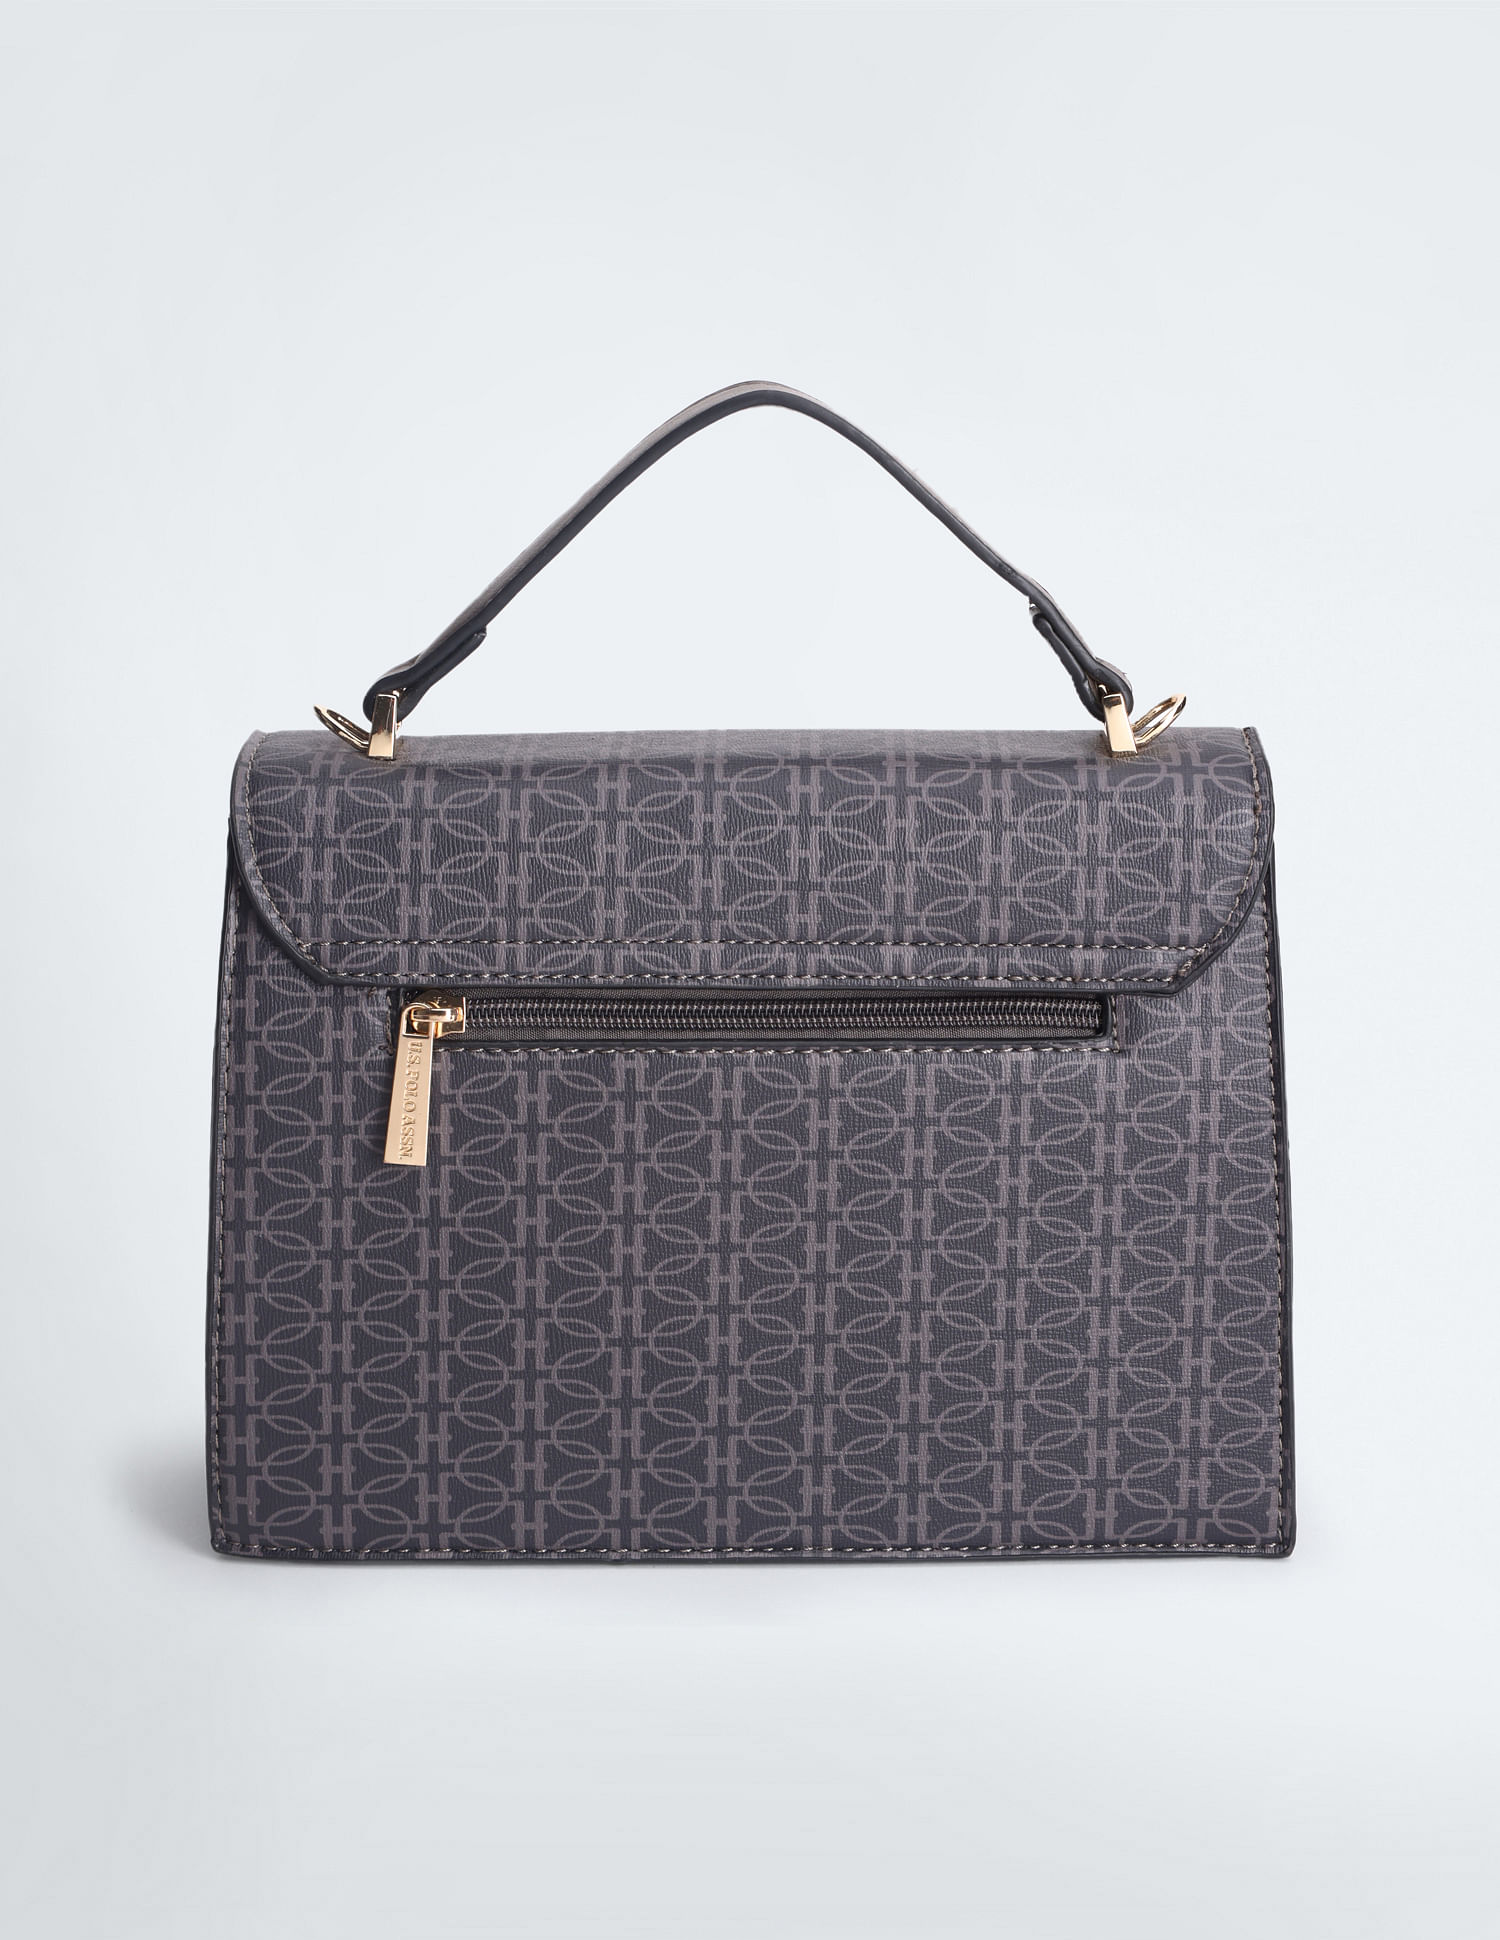 Geometric Print Sling Bag, Trendy Pu Leather Chest Purse, Women's